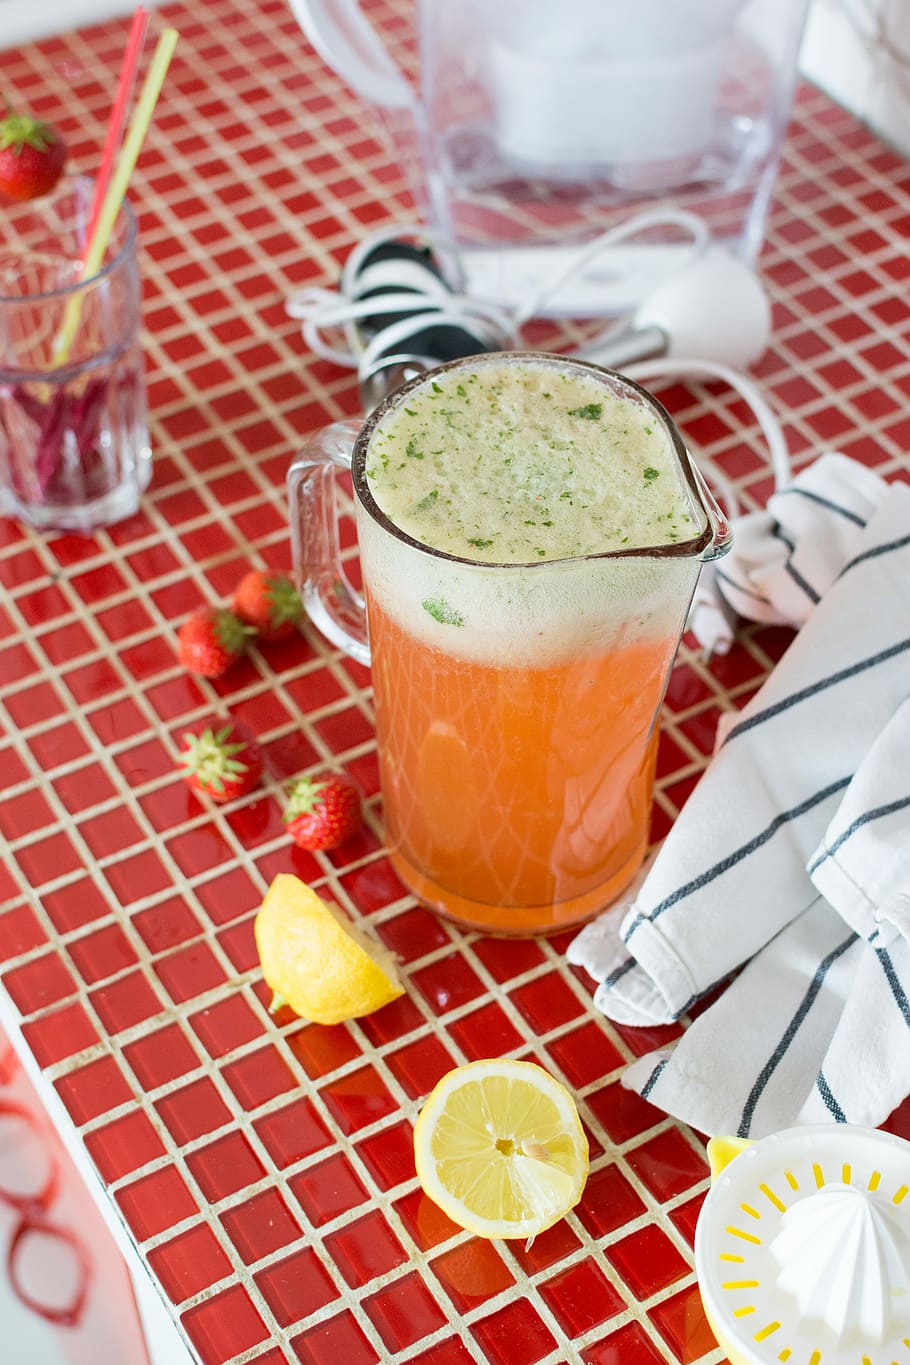 Homemade strawberry and basil lemonade, drink, fresh, kitchen